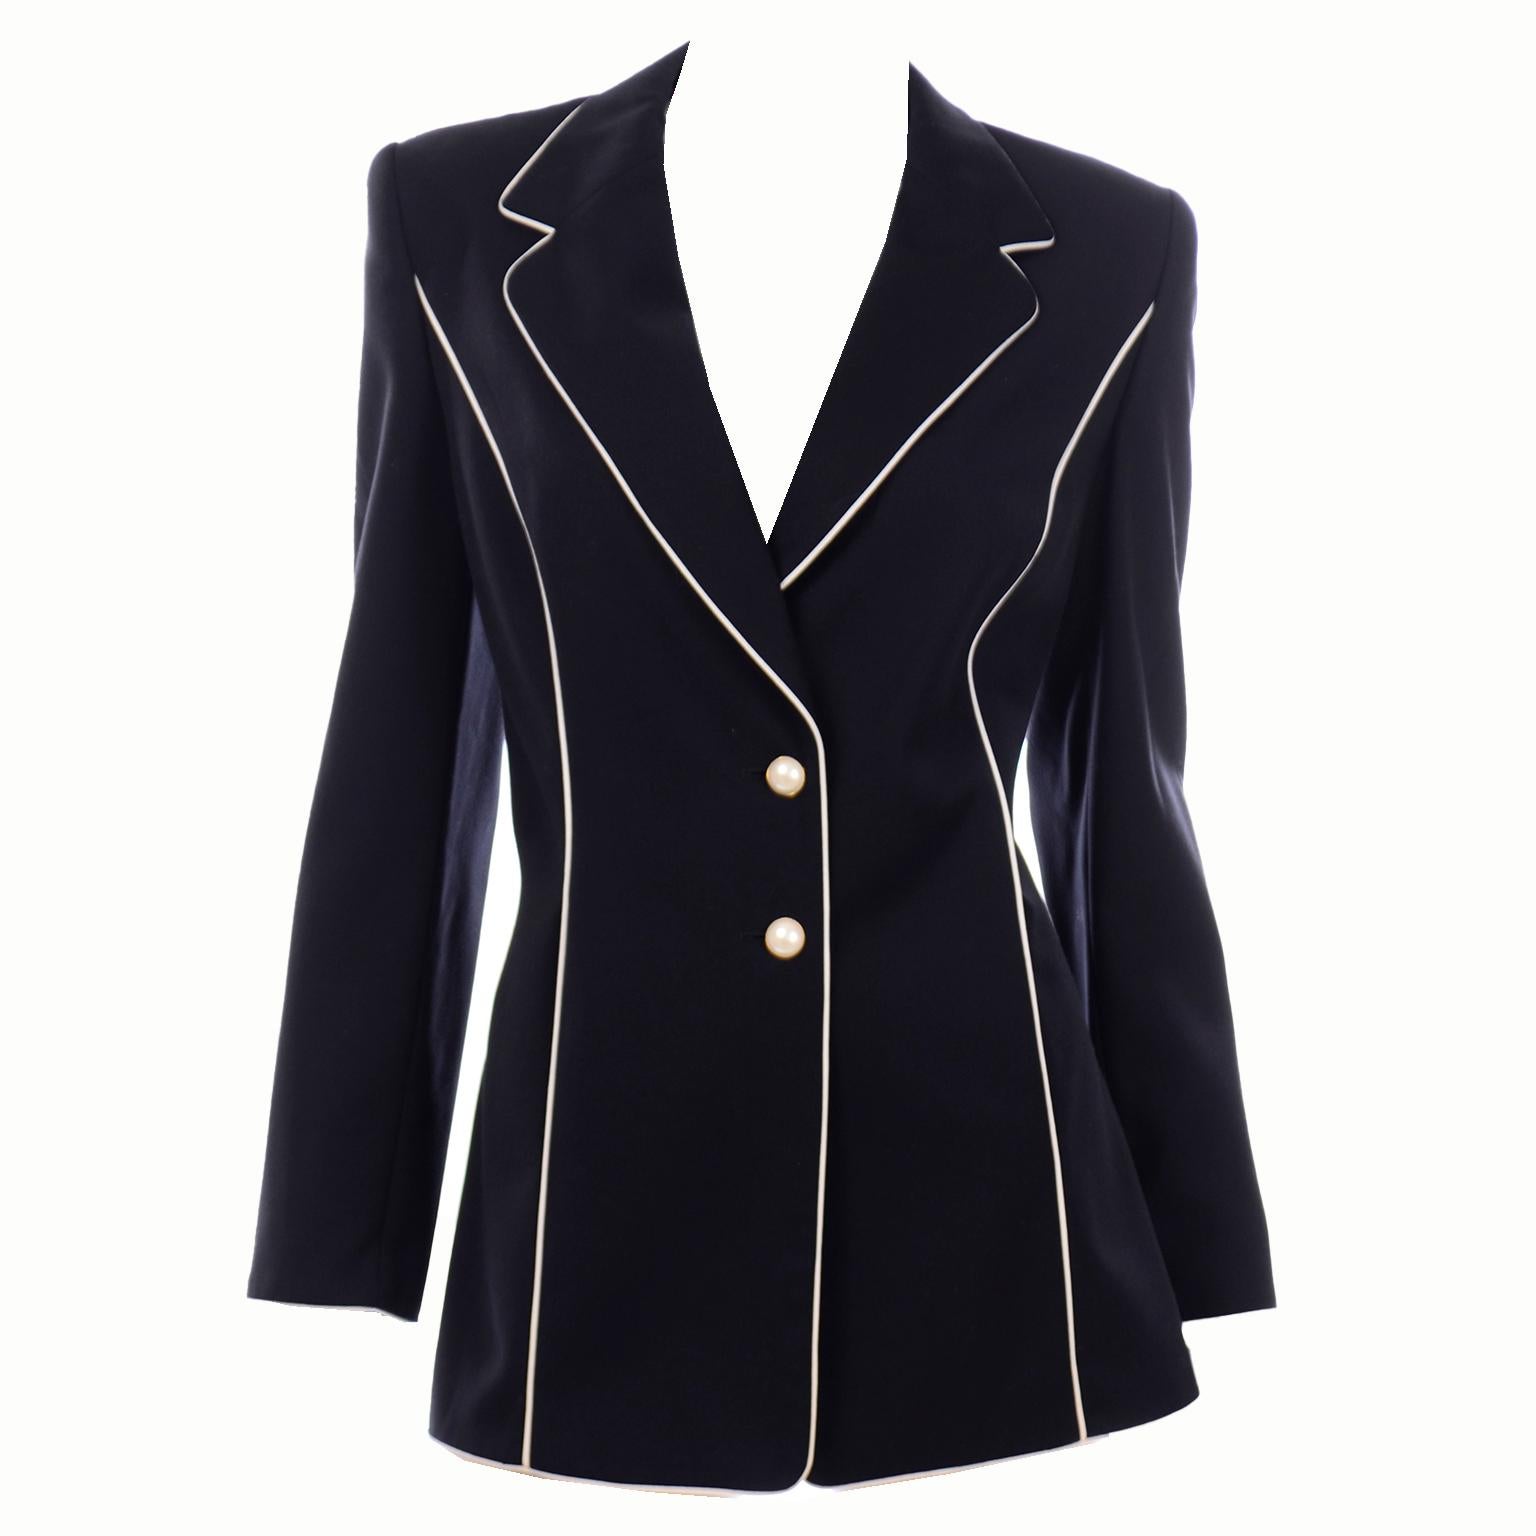 Vintage Escada Saks Fifth Avenue Midnight Navy Blue Blazer Jacket w White Trim For Sale 5